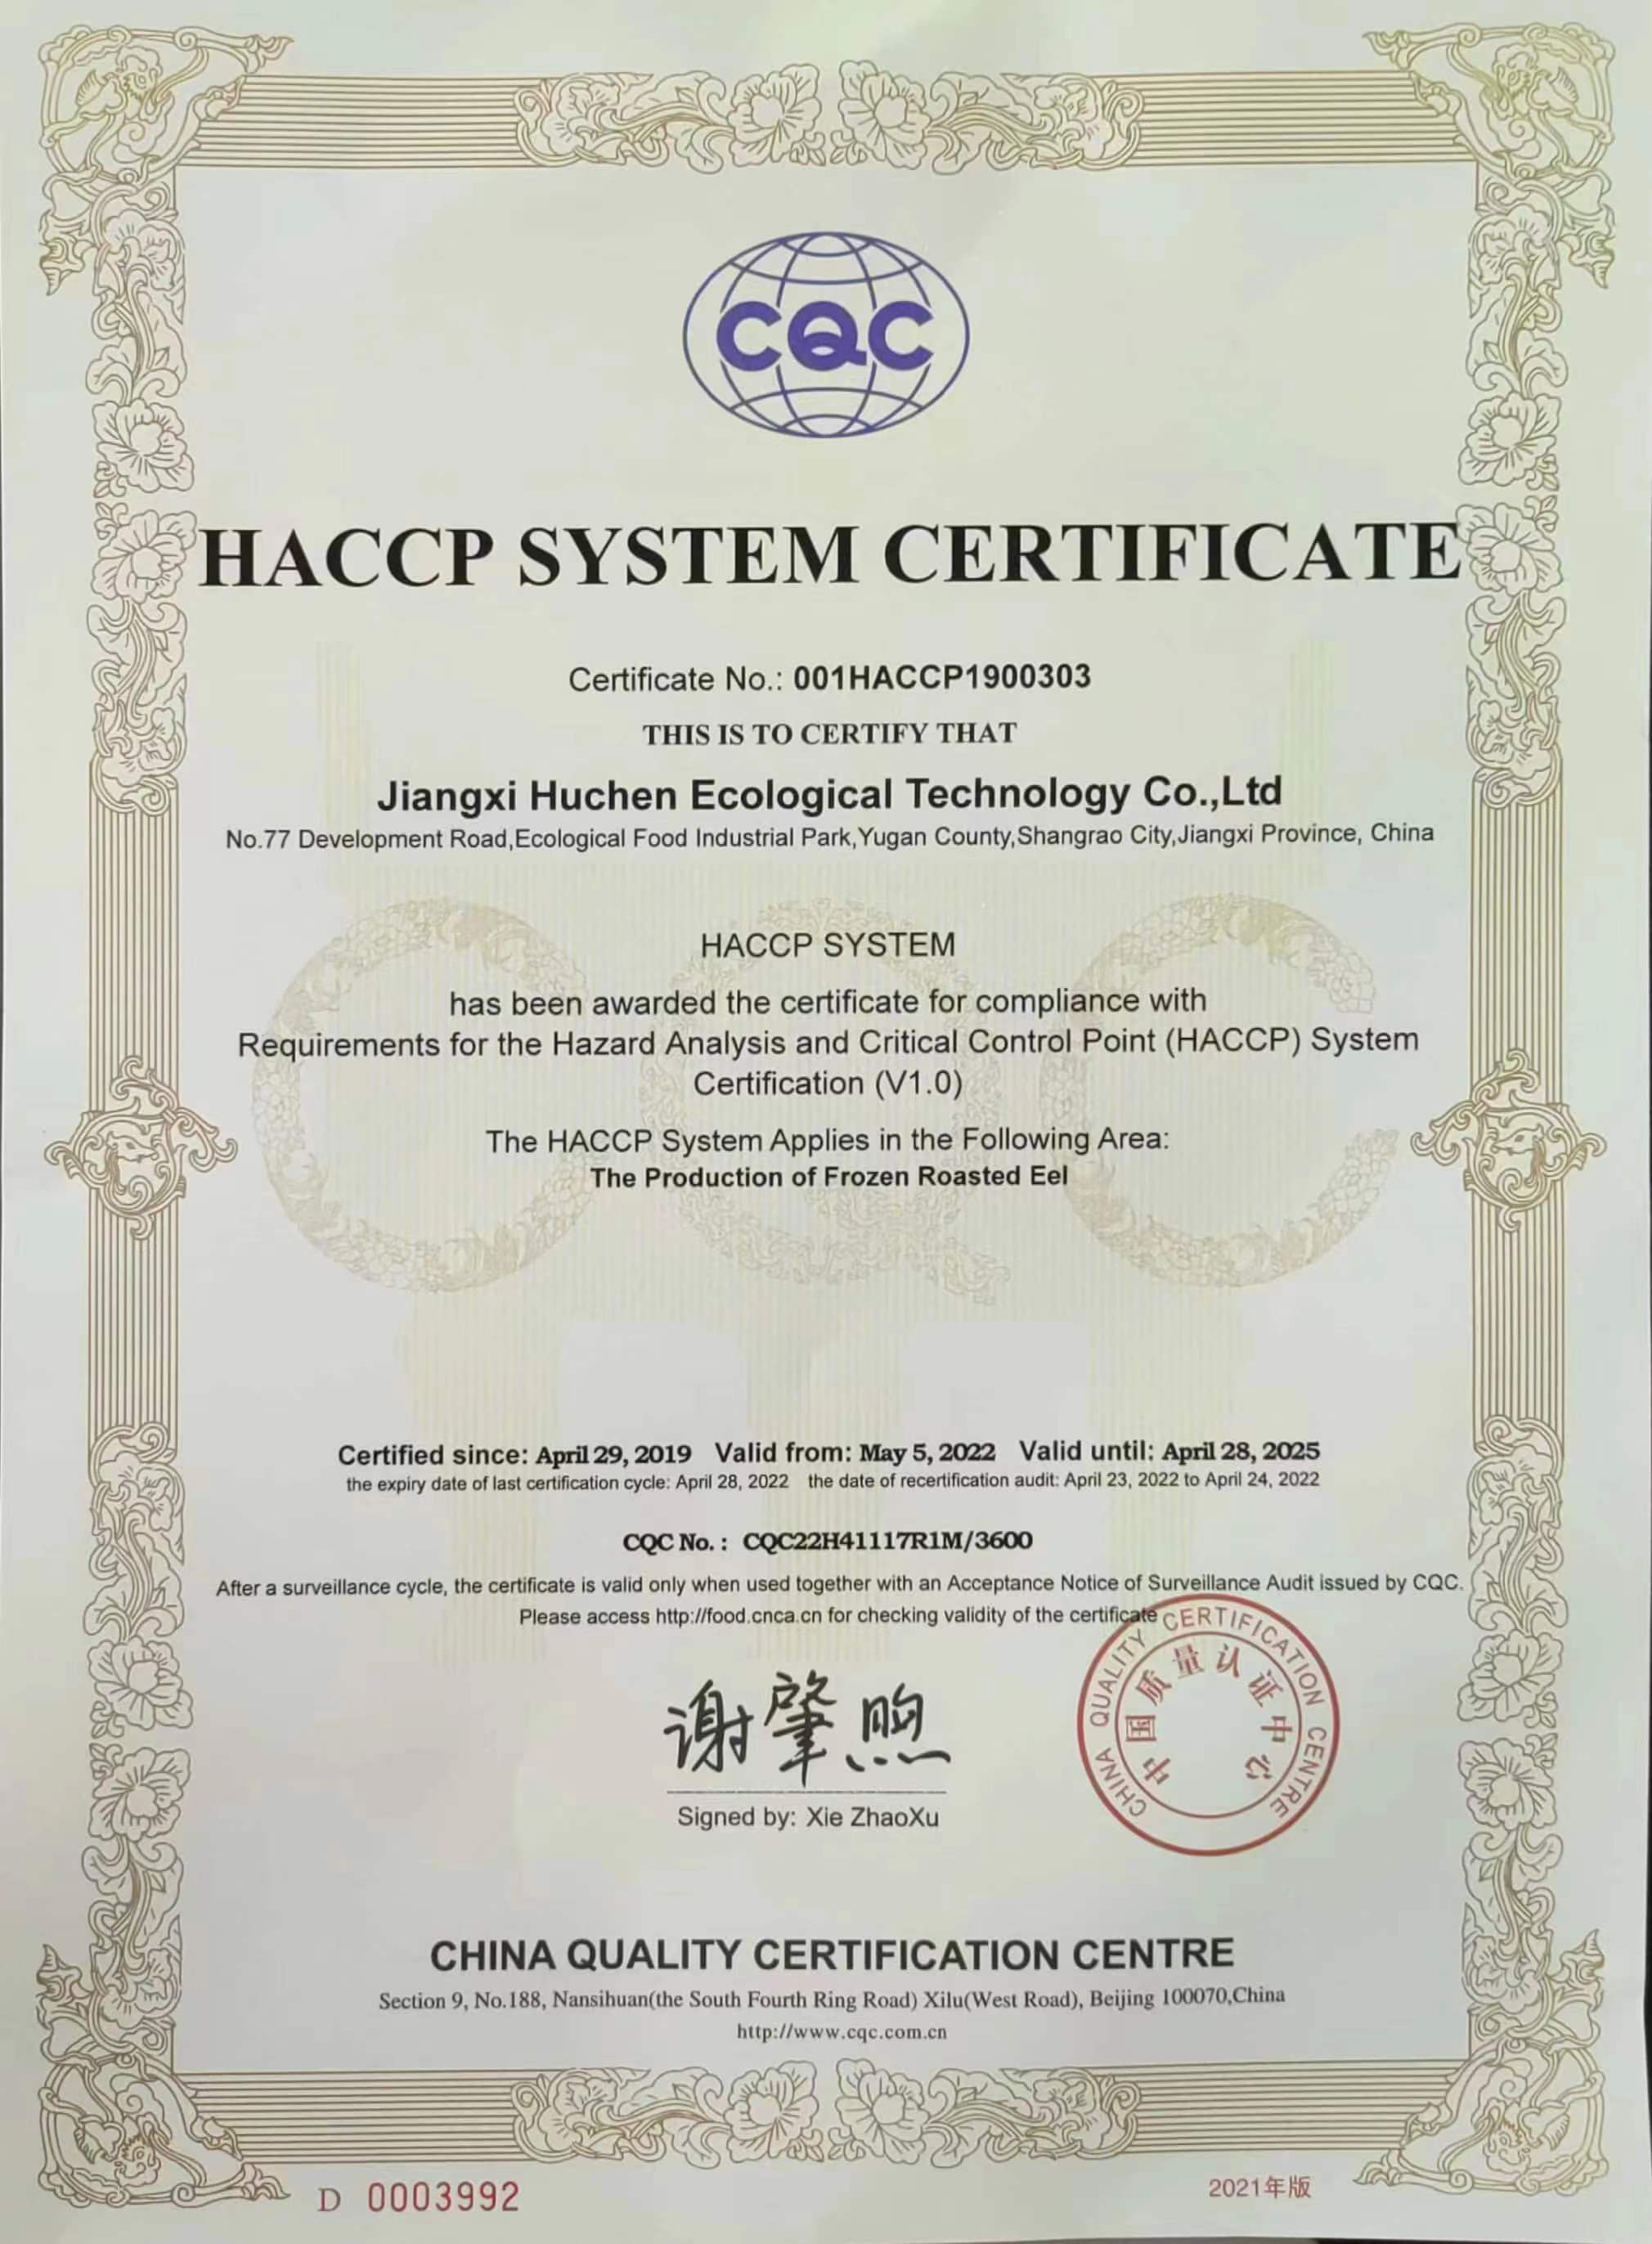 HACCP प्रणाली प्रमाणन